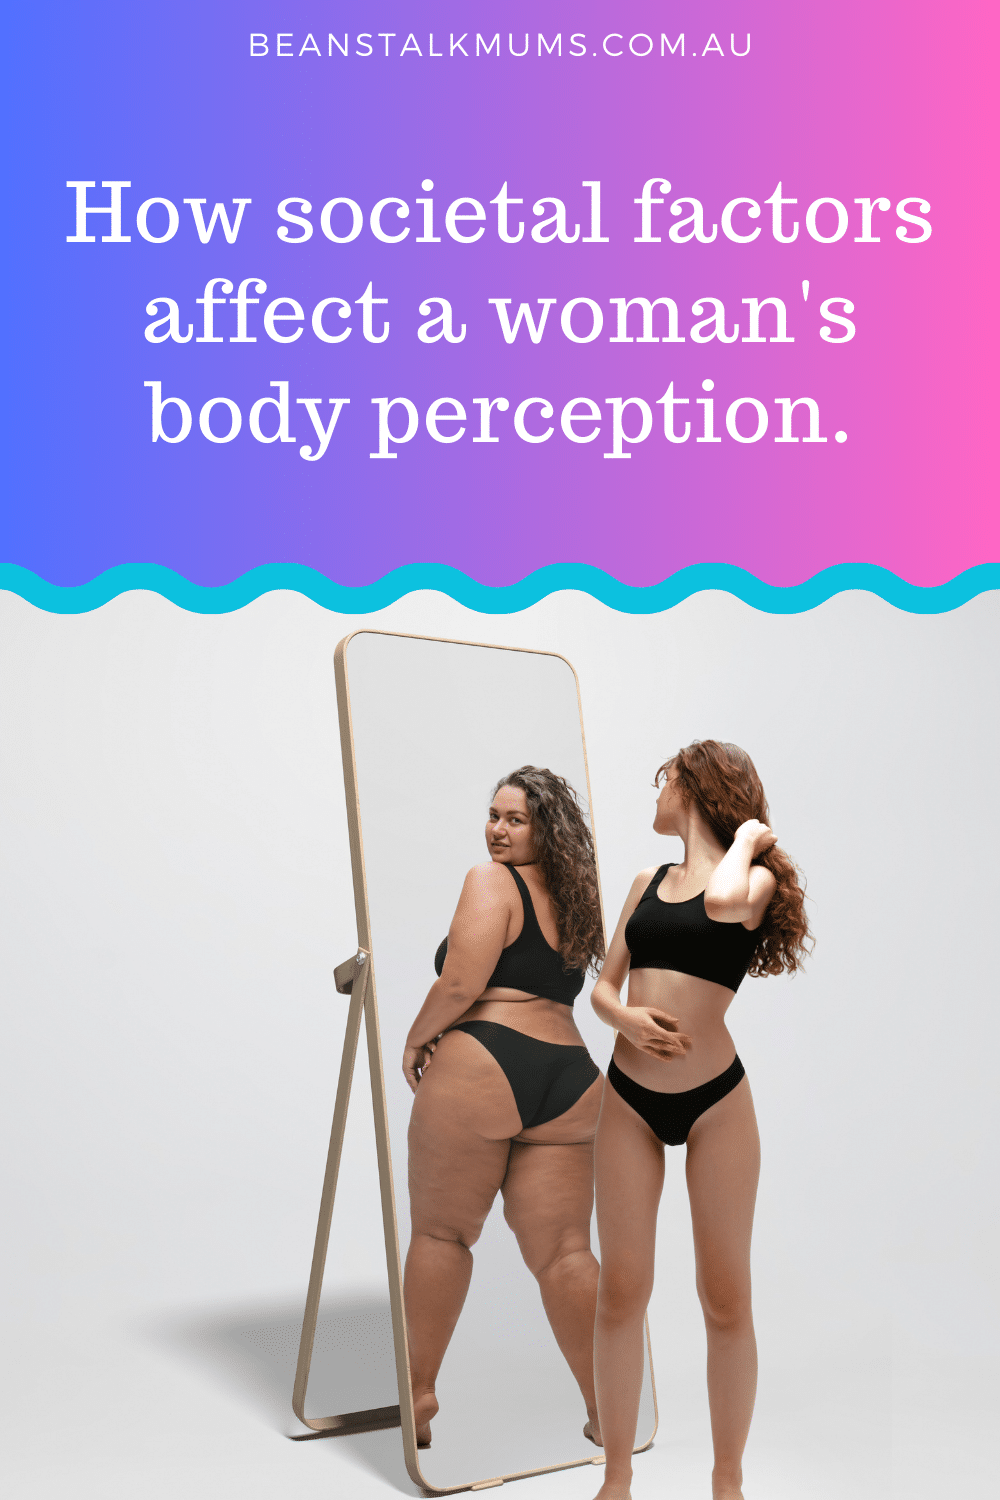 Body perception